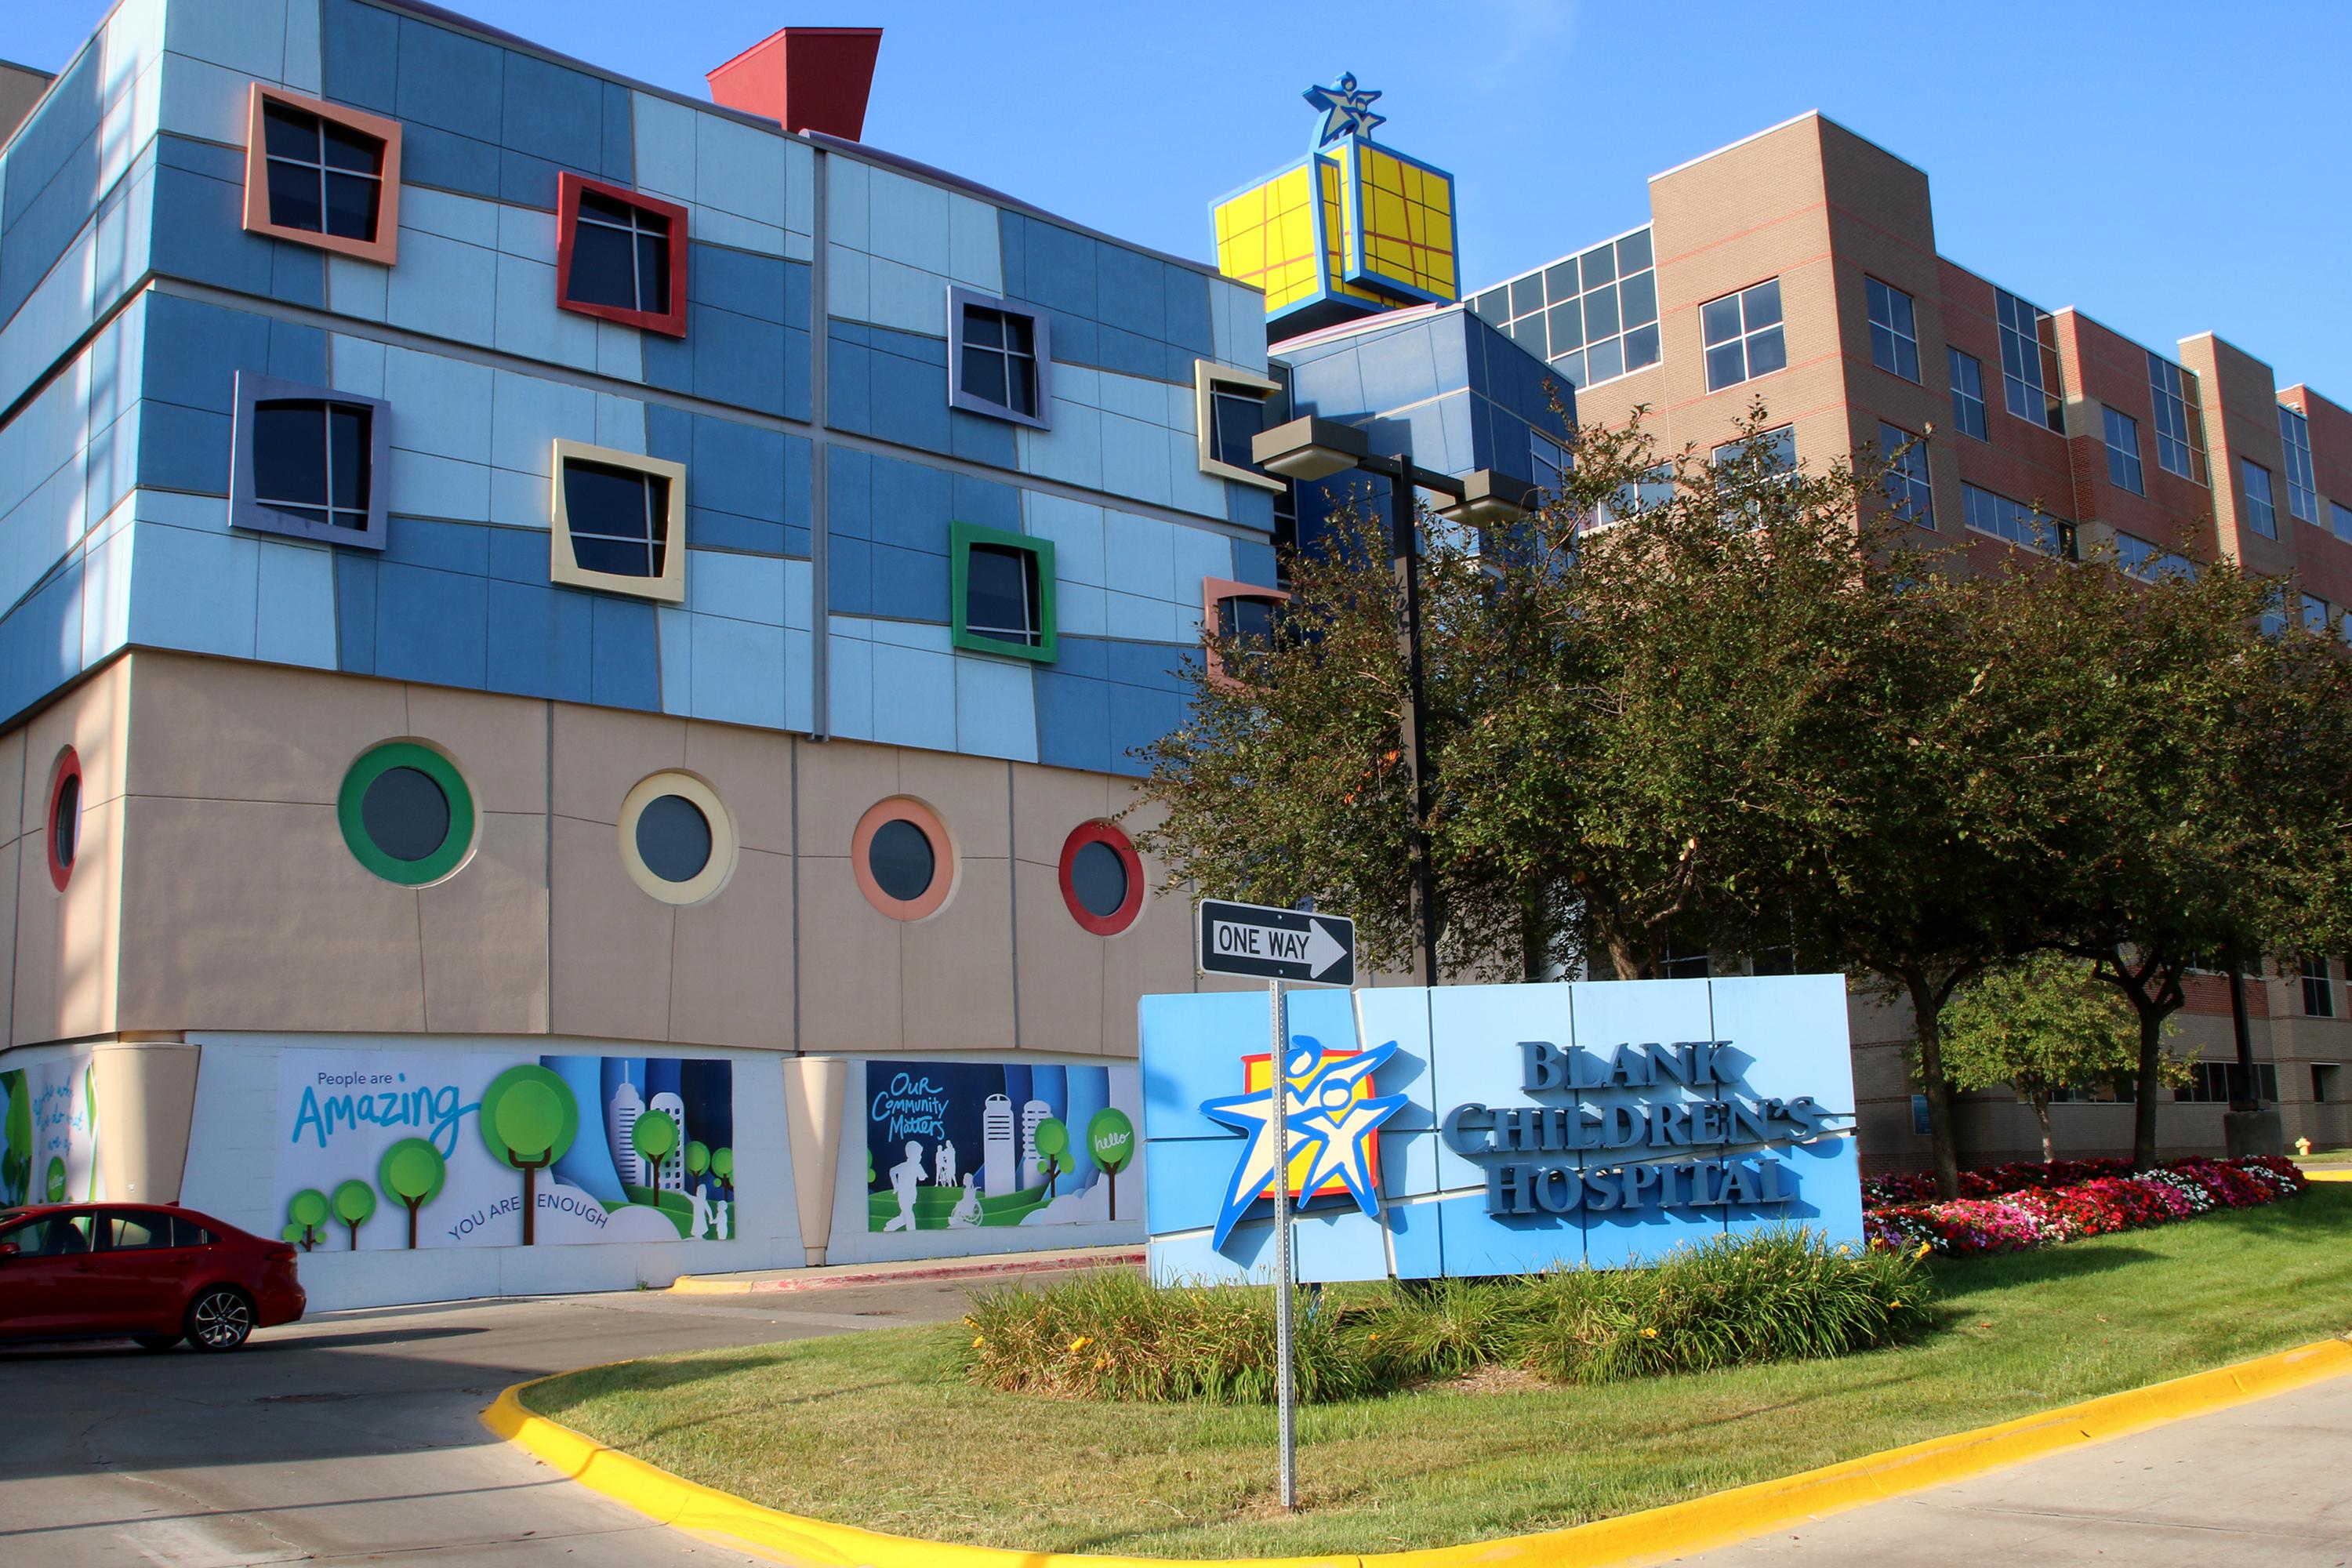 UnityPoint Health - Blank Children's Hospital